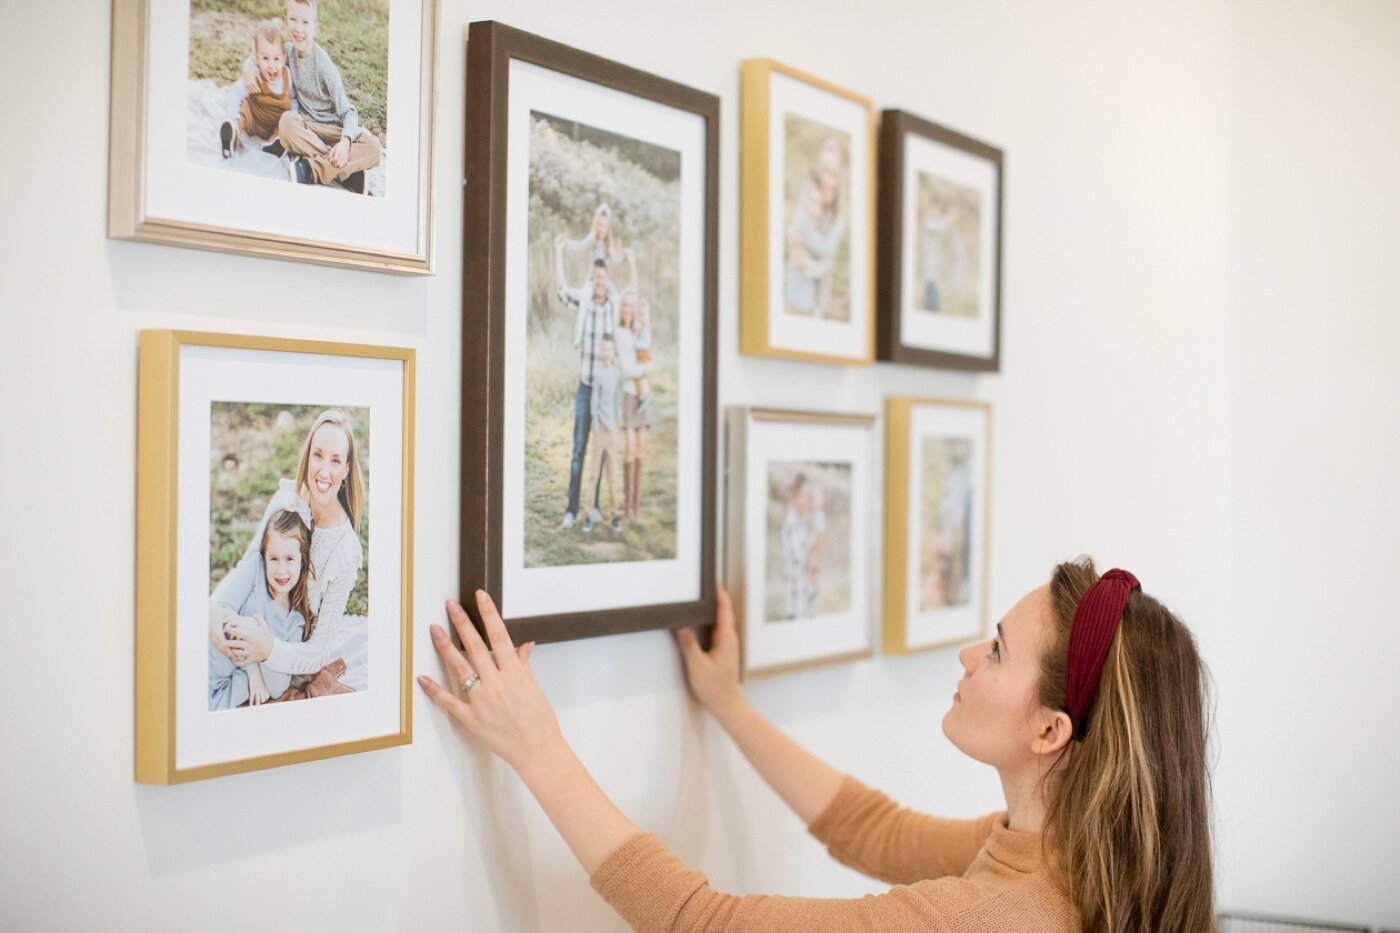 Gallery Wall for Family Photos | Nashville Photographer